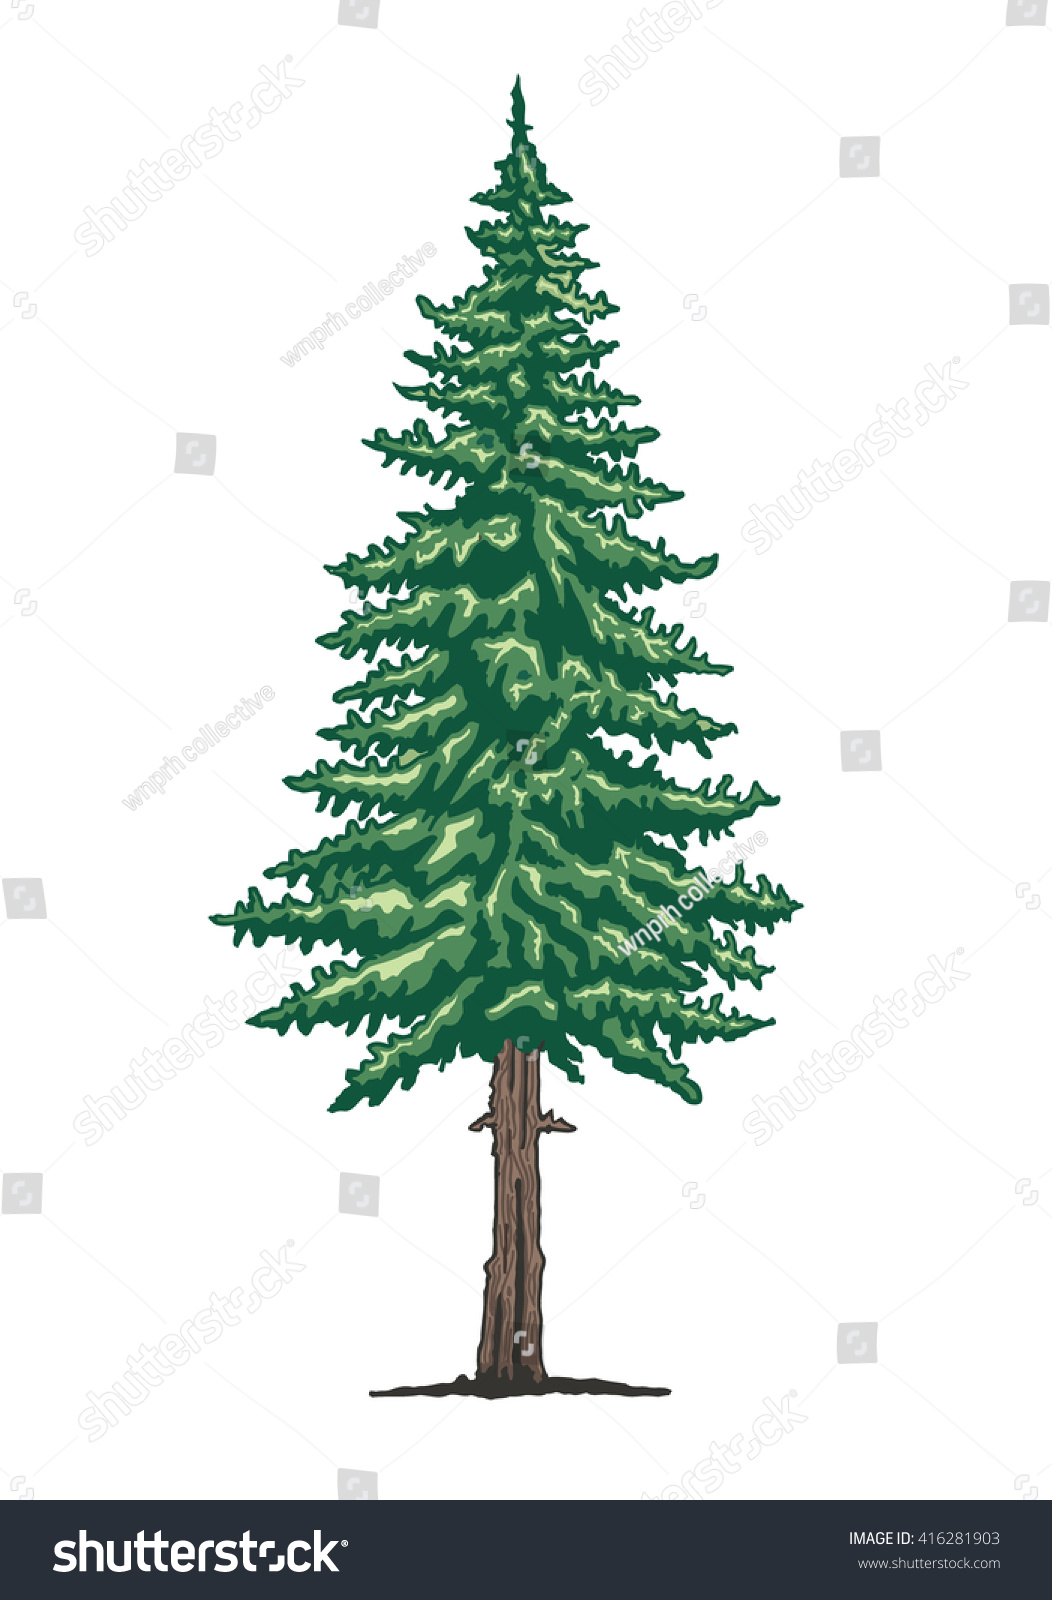 Pine Tree Vector Illustration Stock Vector 416281903 - Shutterstock